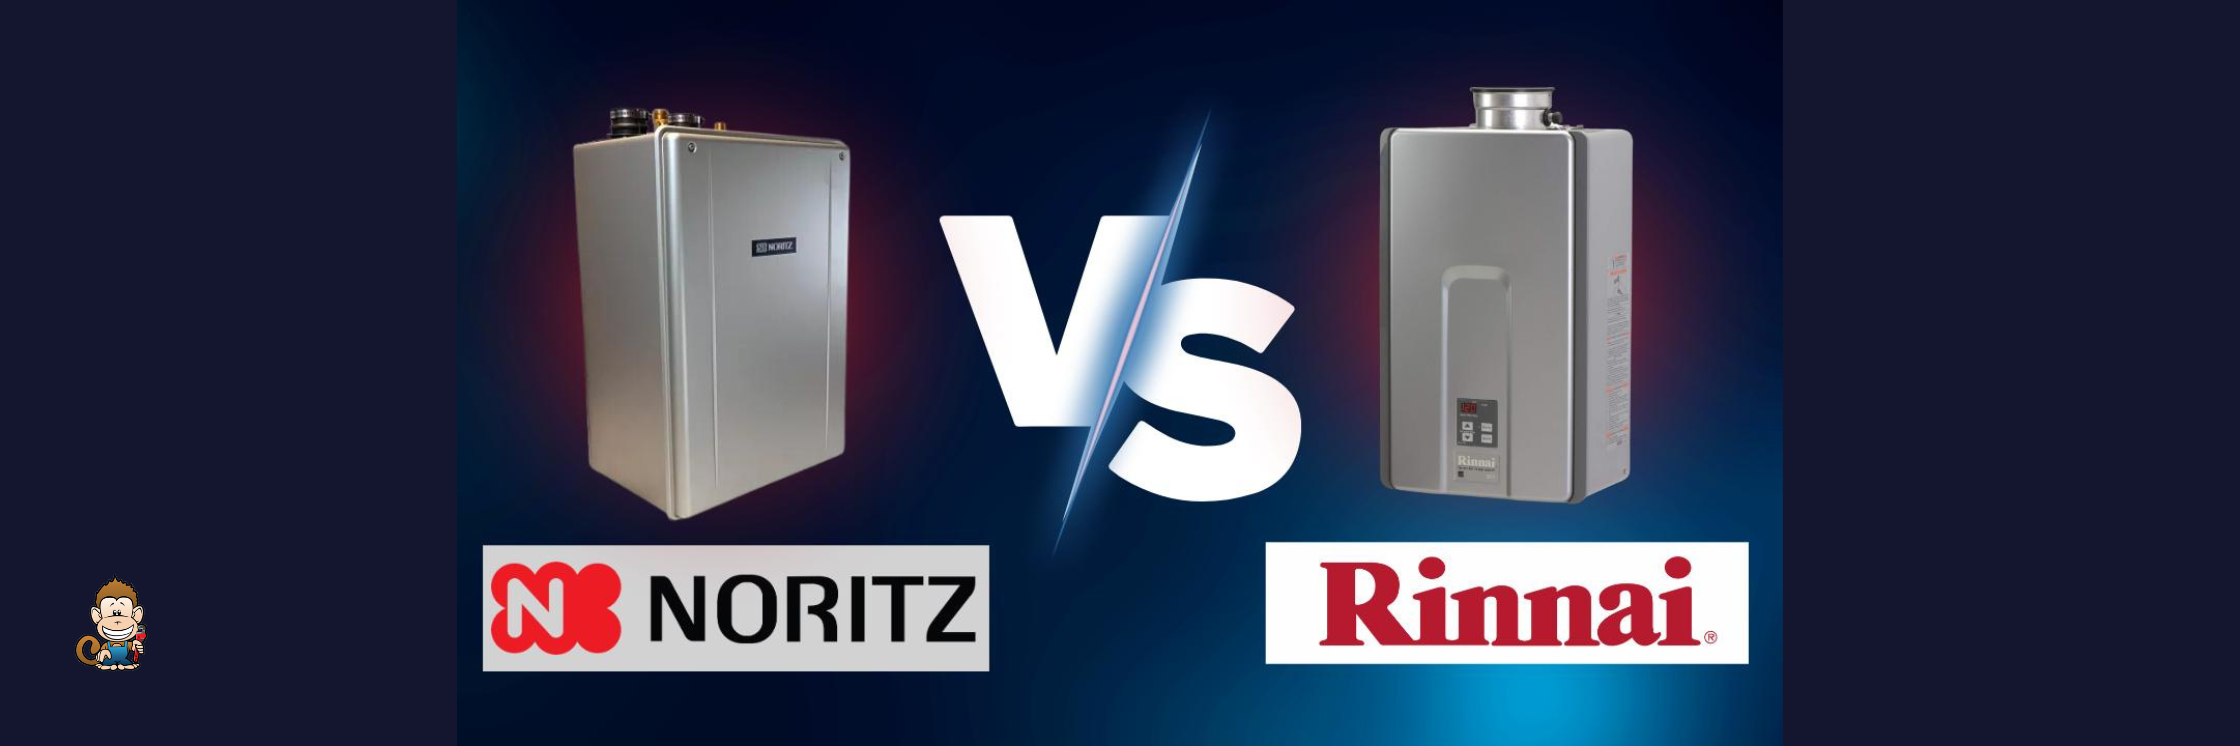 Noritz vs Rinnai: Tankless Water Heaters (video)